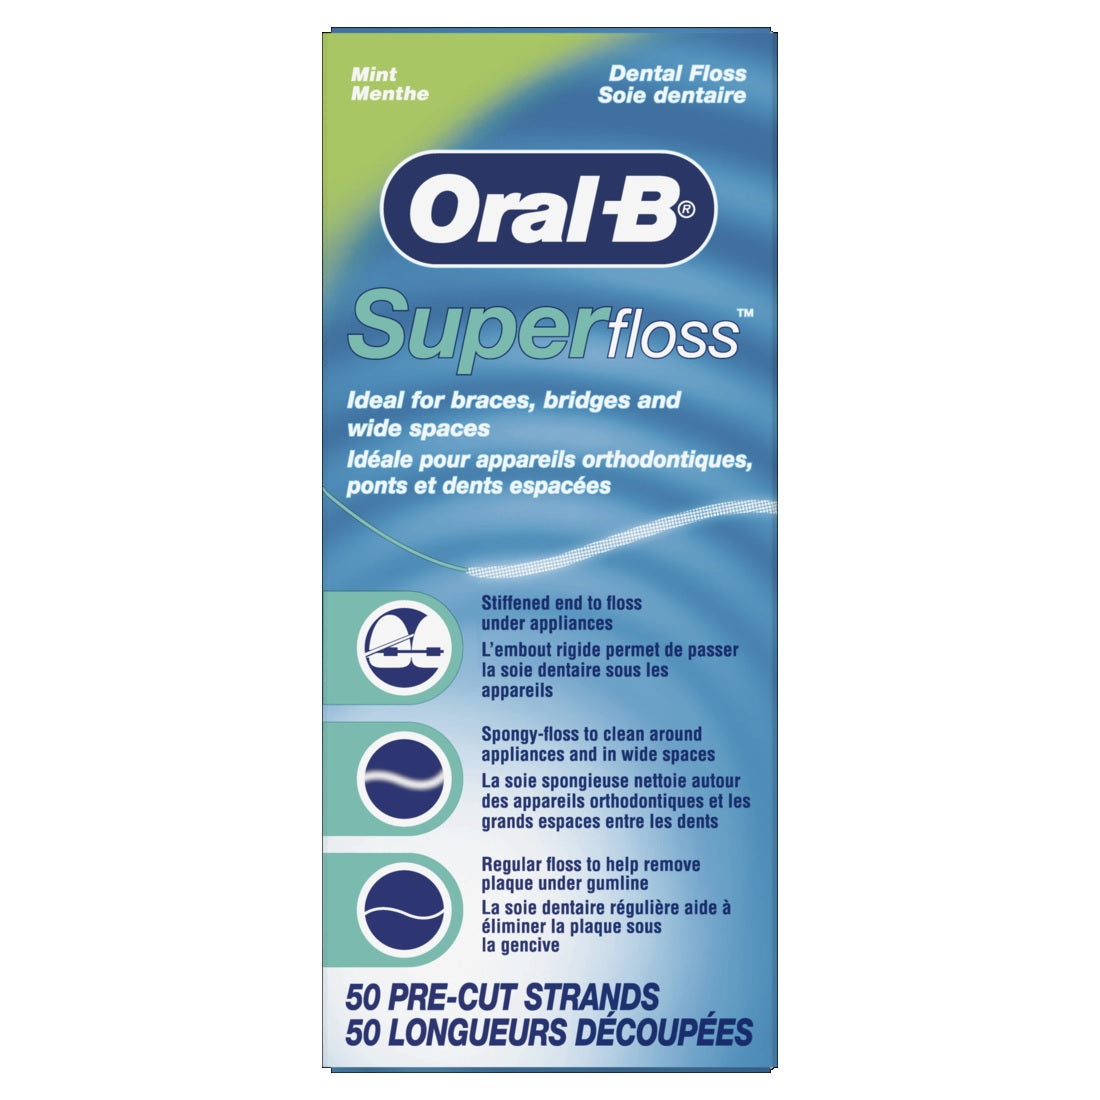 Oral-B Super Floss Pre-Cut Strands, Dental Floss for Bridges, Braces and Wide Spaces 50 Strands - 50ct/24pk